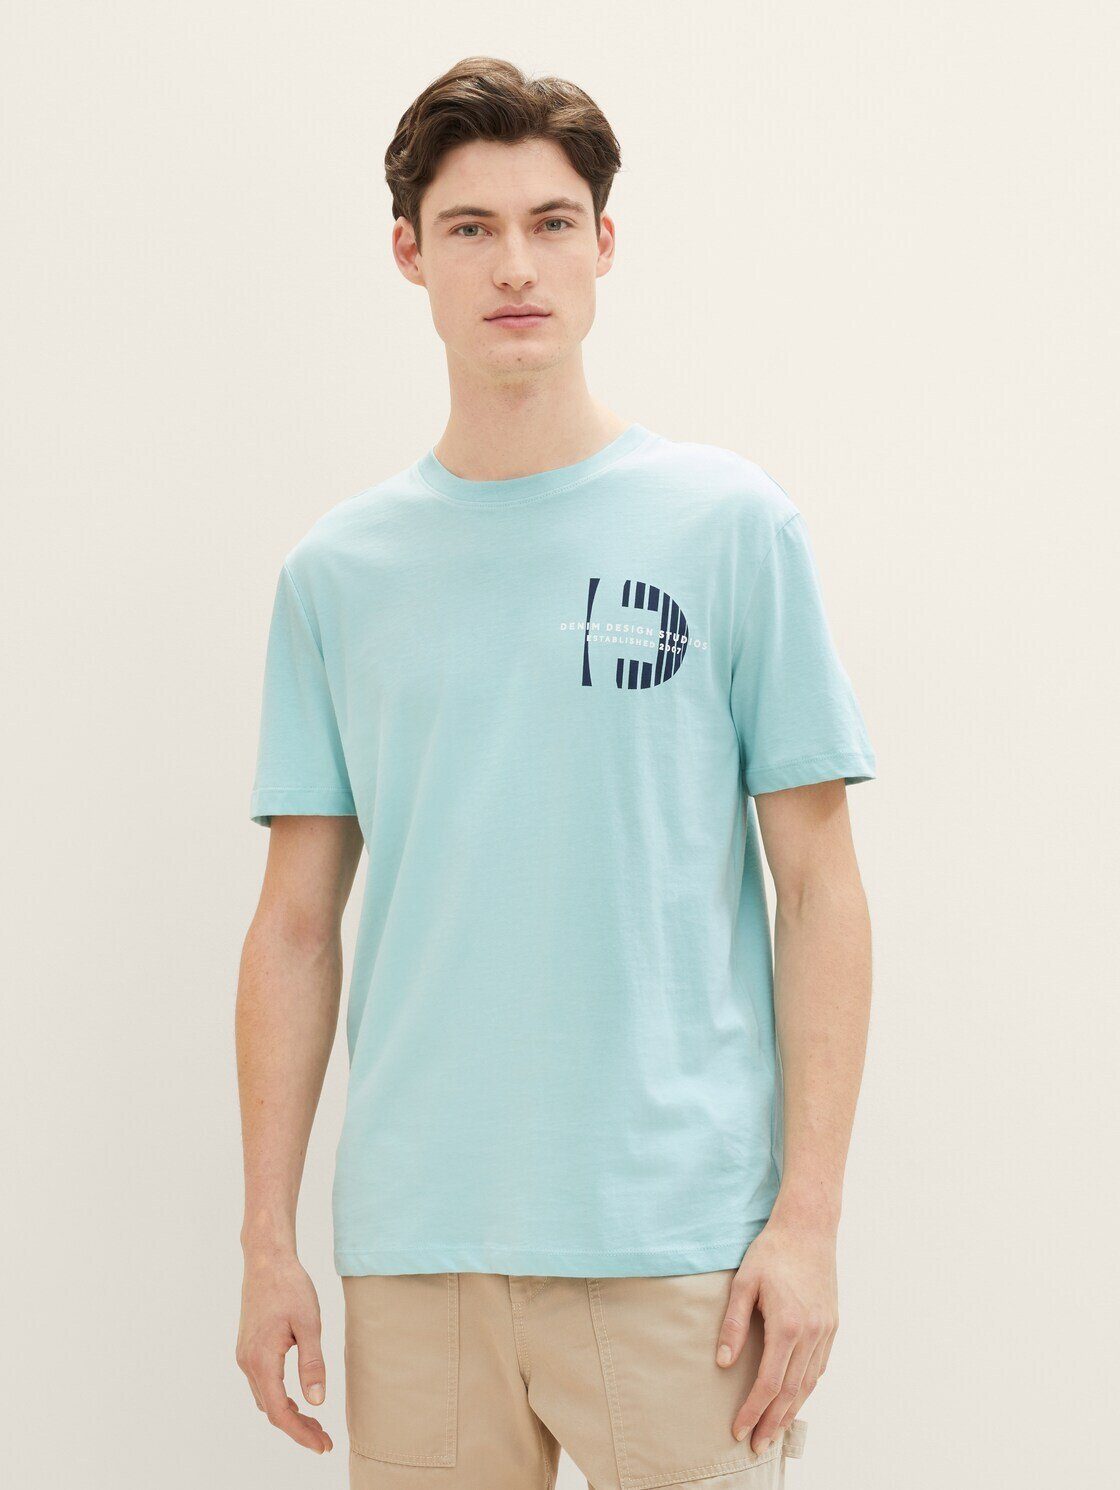 TOM TAILOR Denim T-Shirt mit Print pastel T-Shirt turquoise